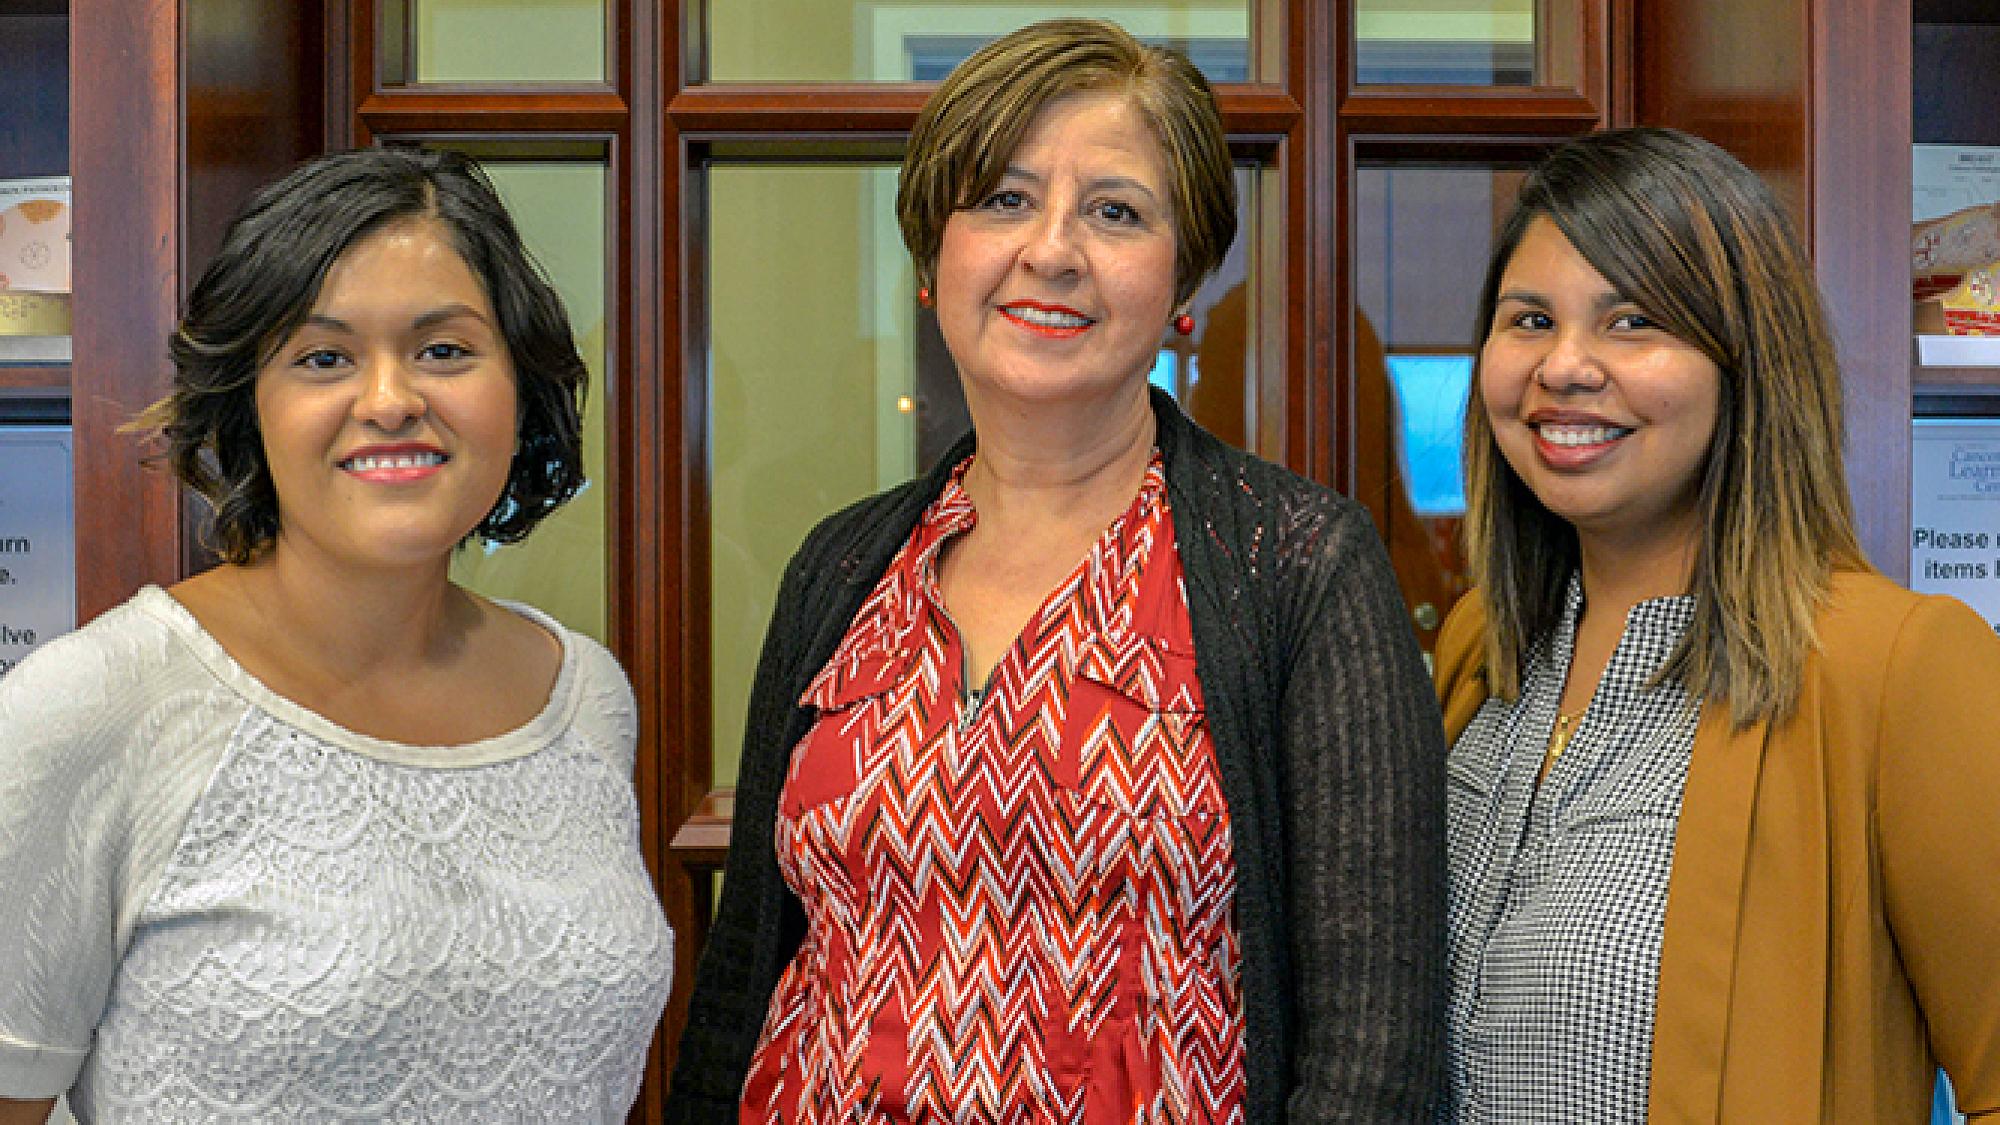 Anna Martinez, Liliana Mulato, and Guadalupe Tovar standing together